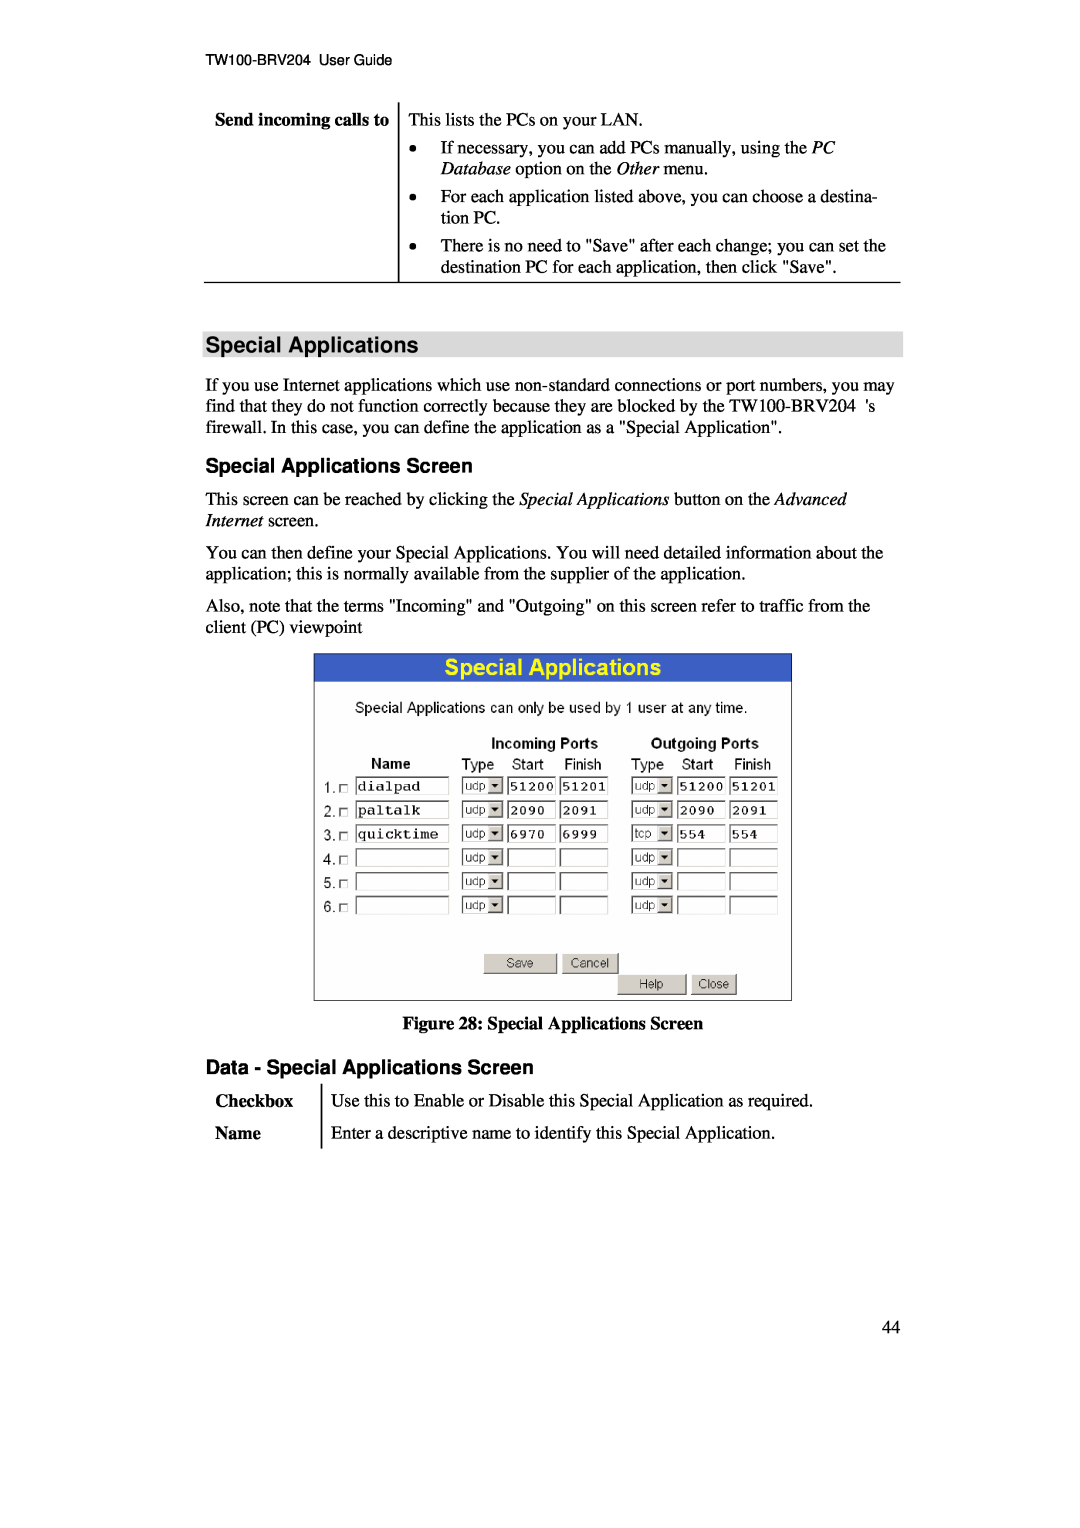 TRENDnet BRV204 manual Special Applications Screen, Checkbox, Name 